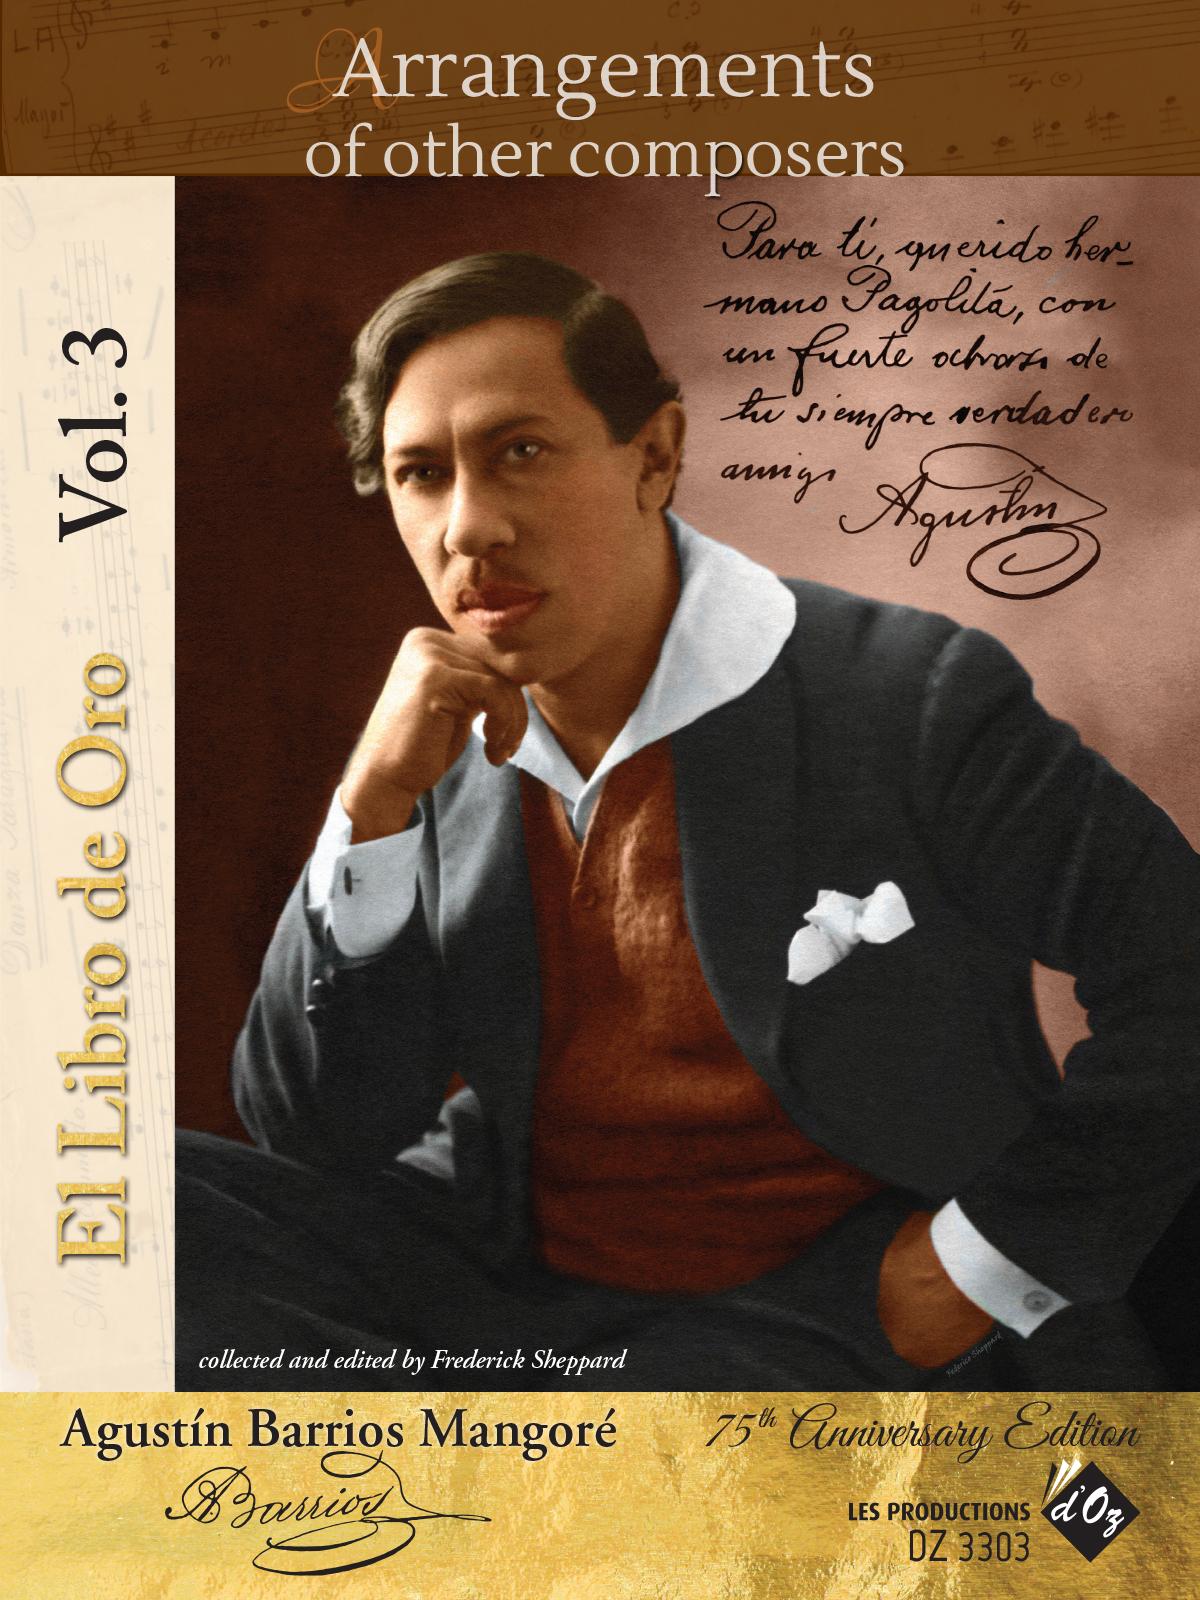 Agustin Barrios Mangore "El Libro De Oro", Vol. 3: Arrangements of Other Composers